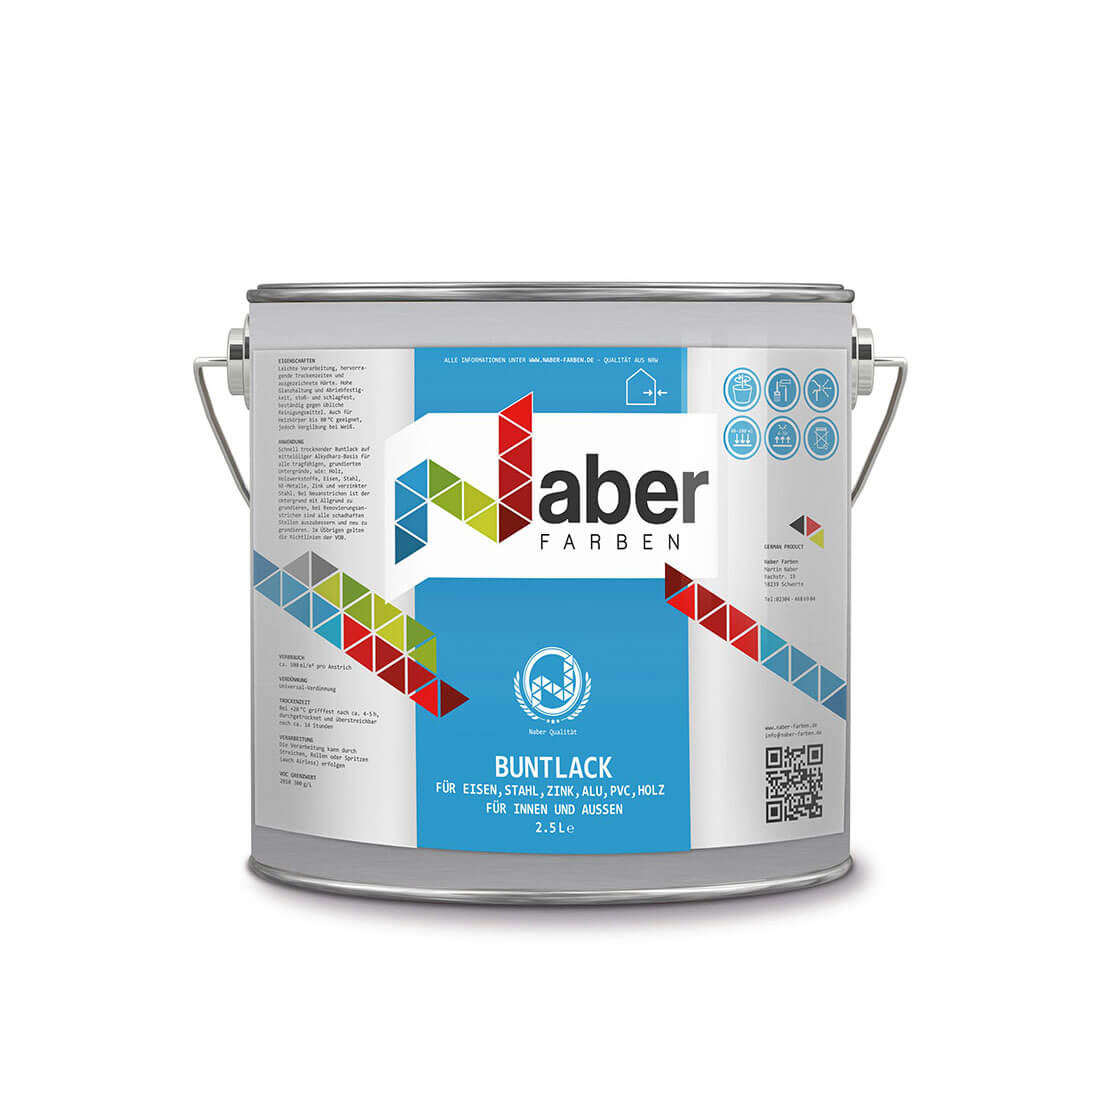 Corporate Design Naber Farben